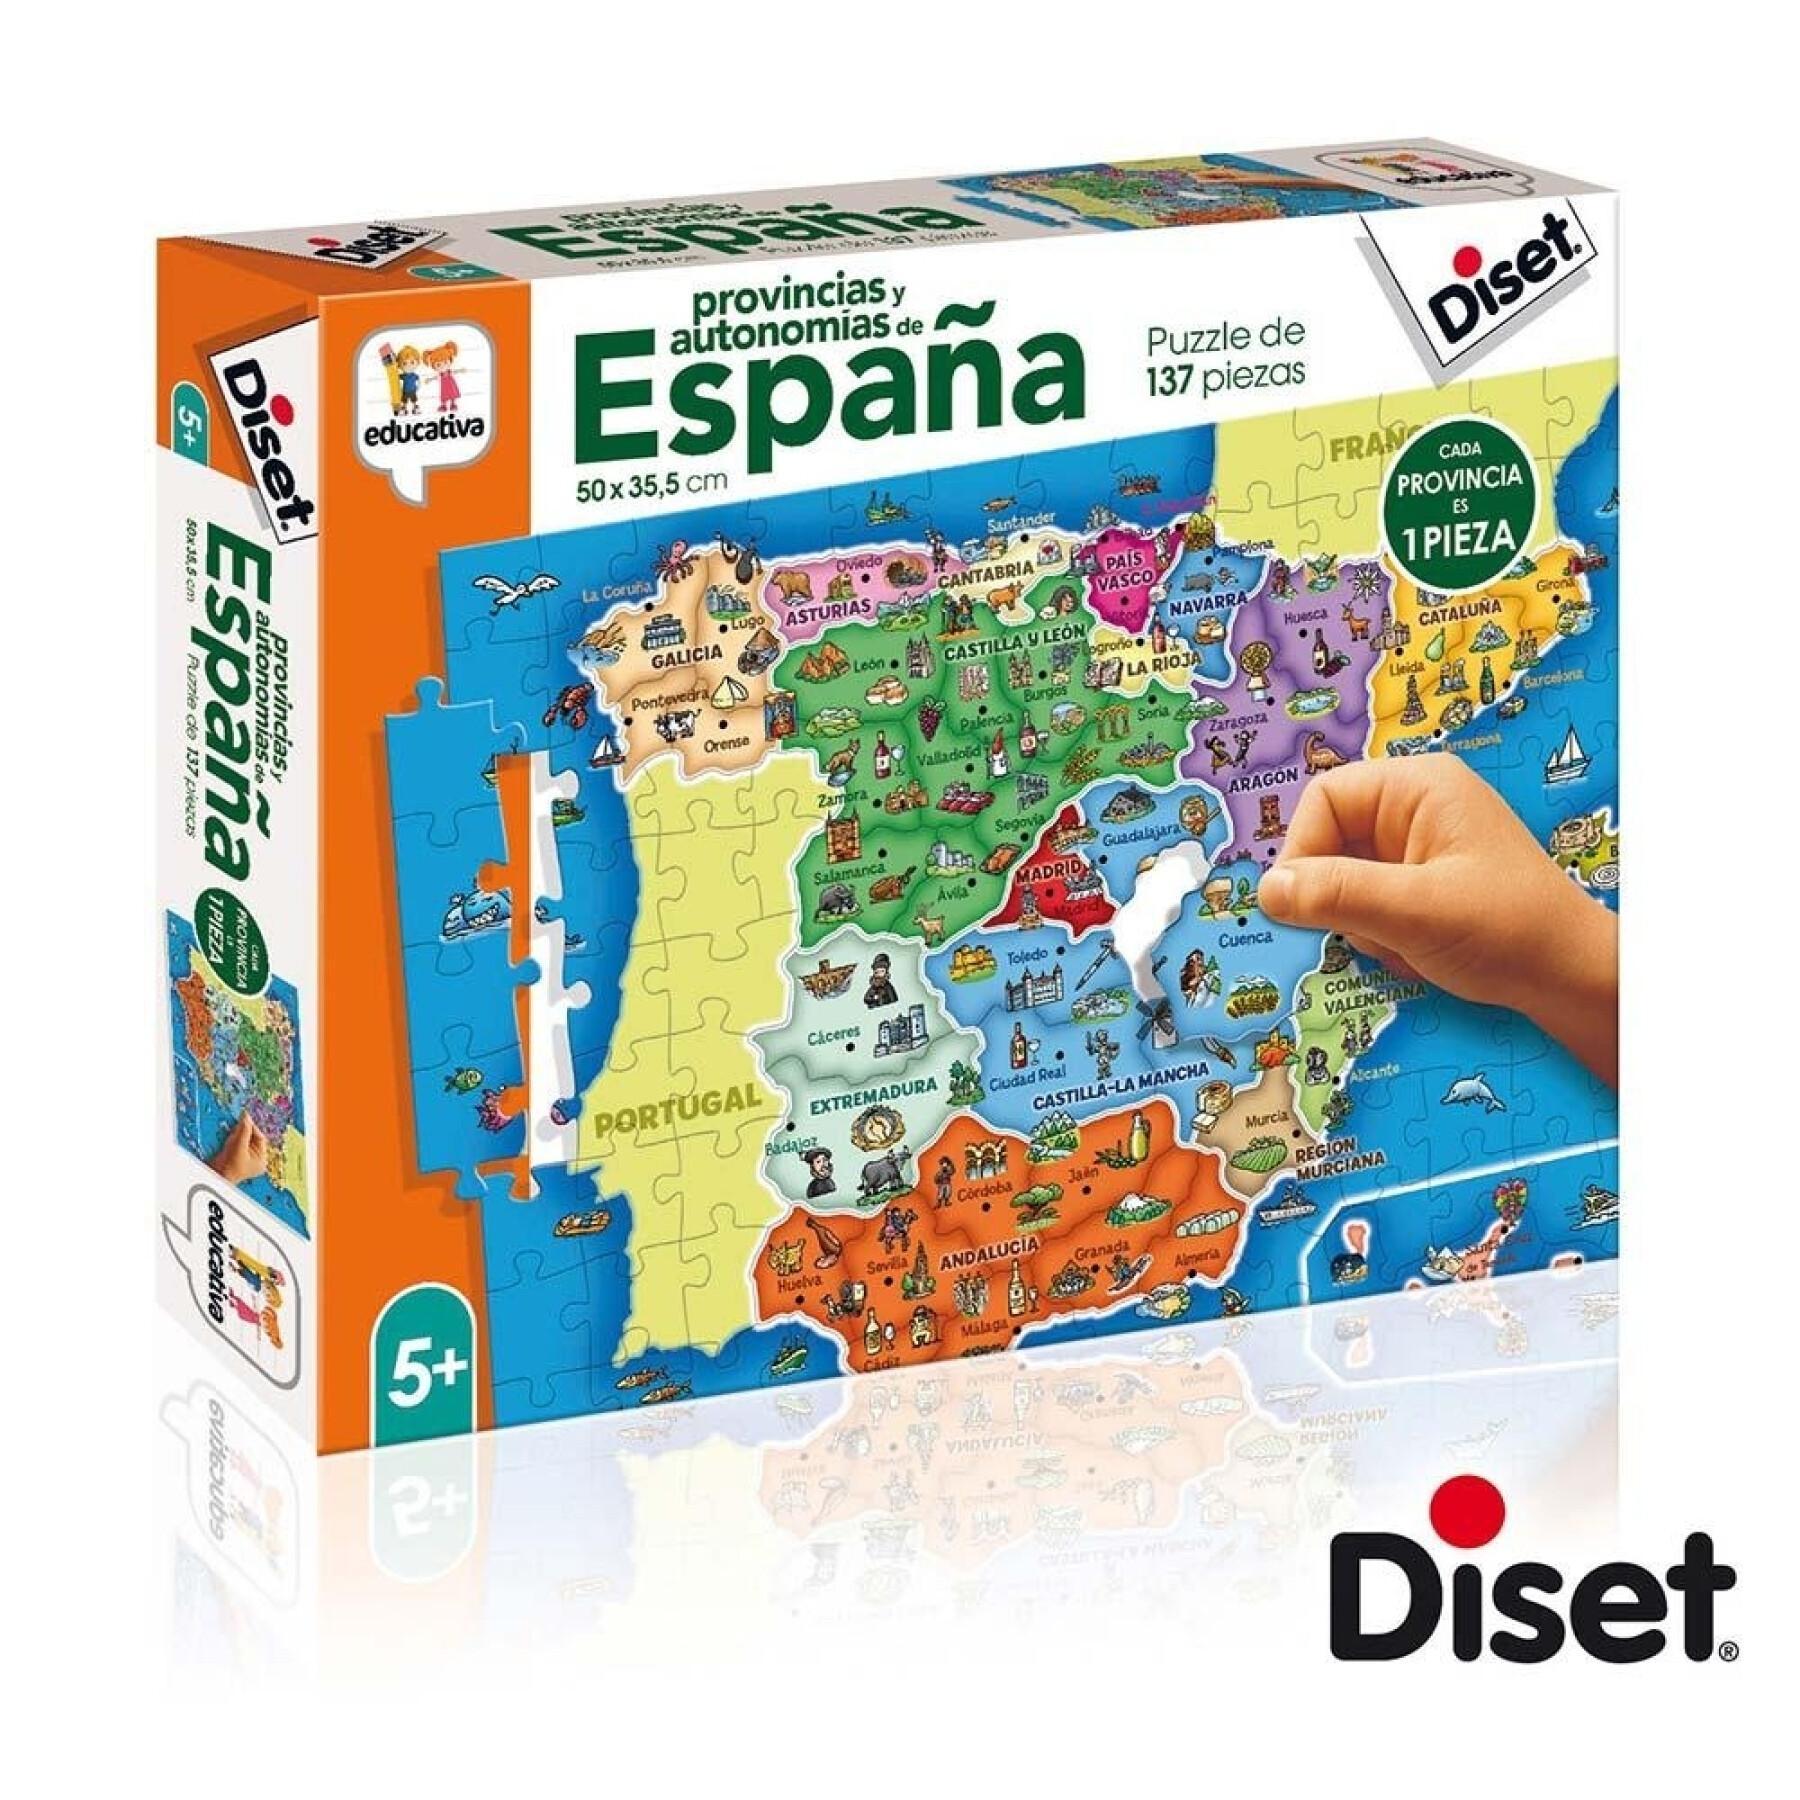 137 piece puzzle Diset España Prov -Autonomías